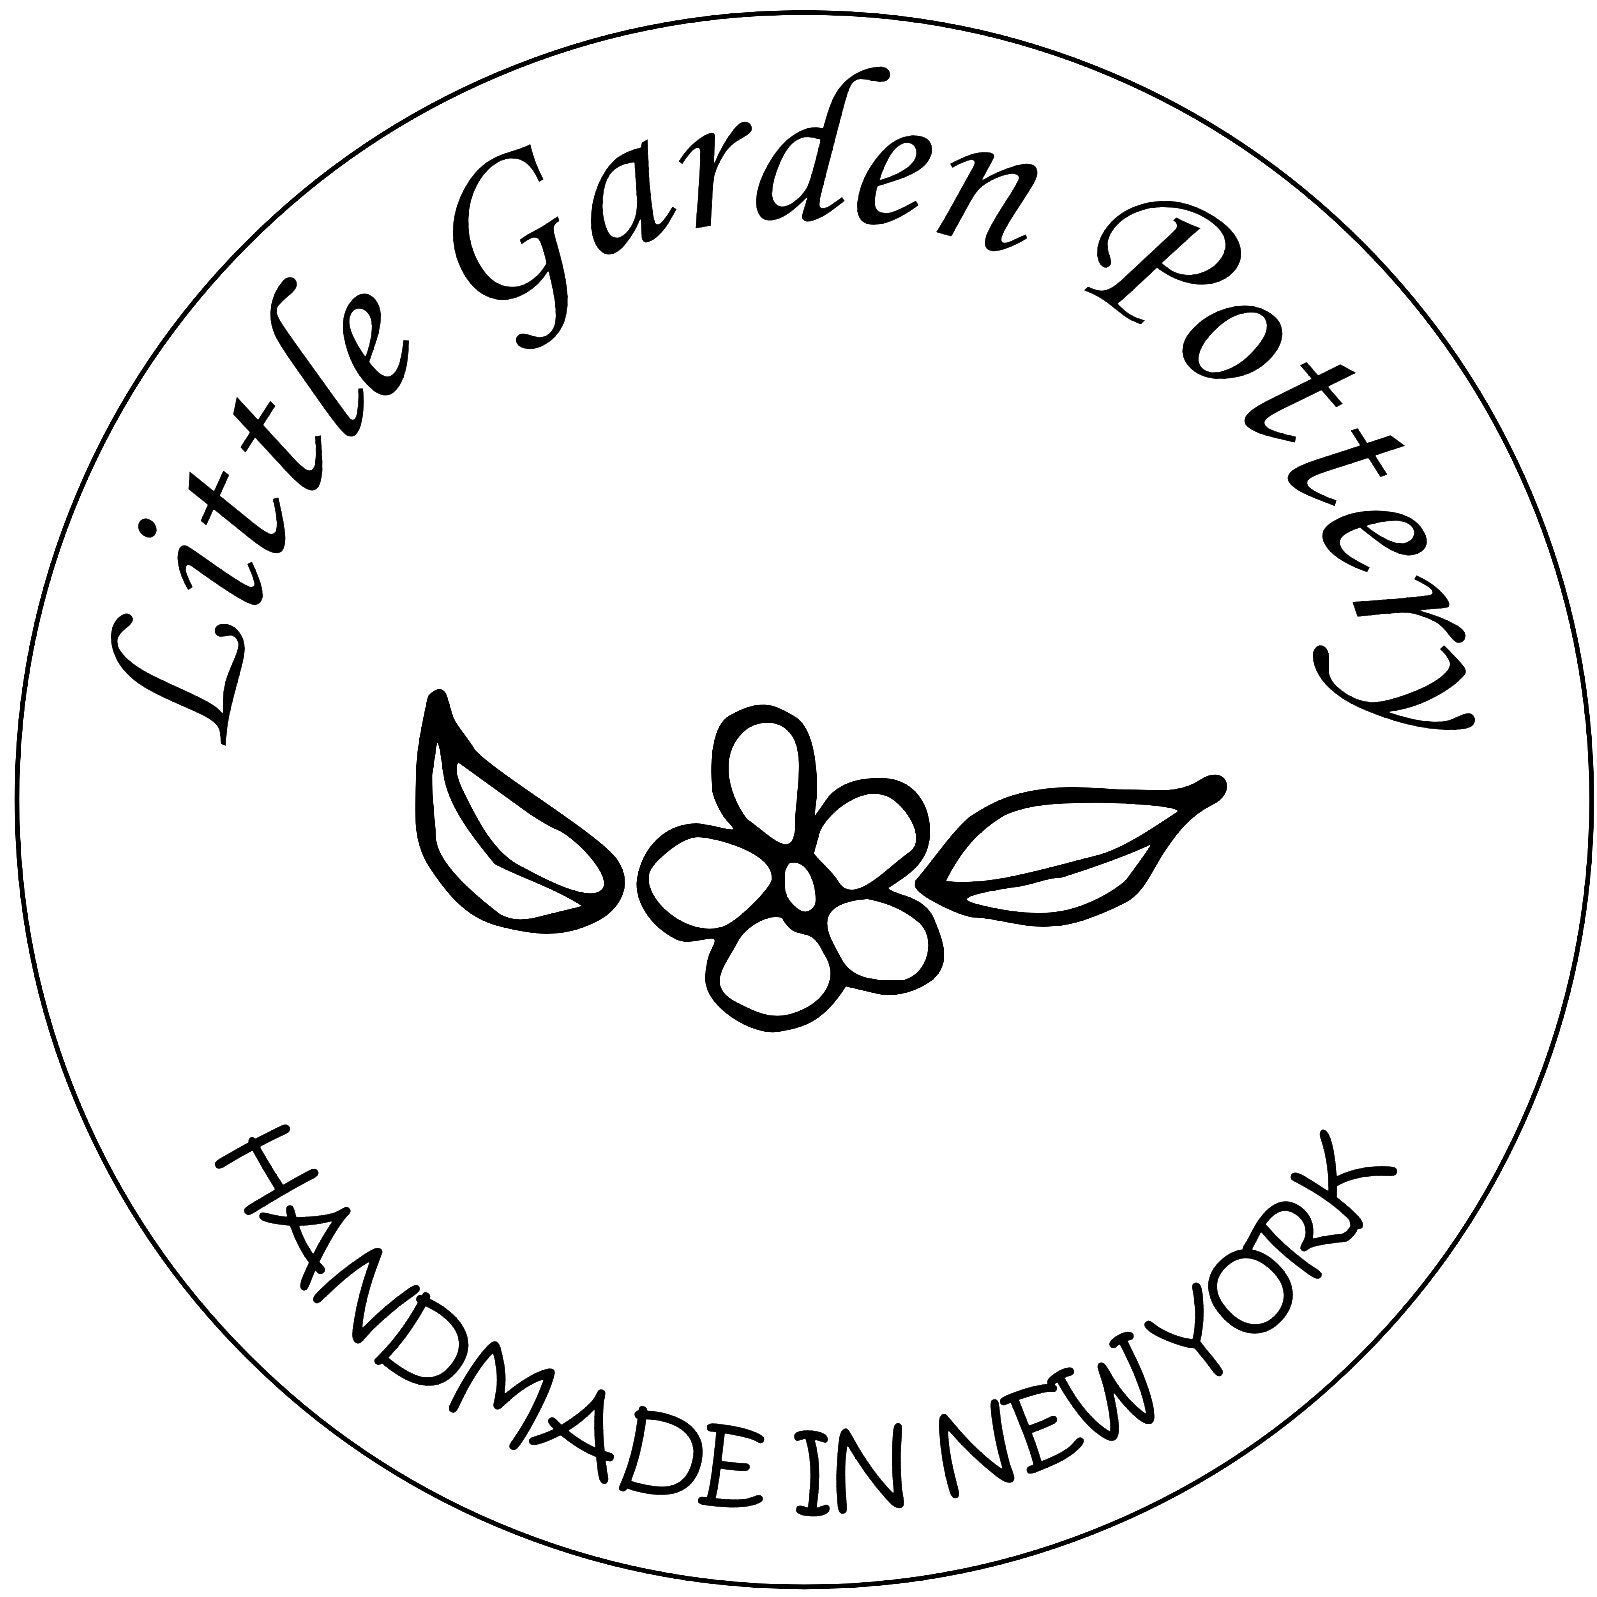 LittleGardenPottery - Creating Beauty Through Earth. - Etsy